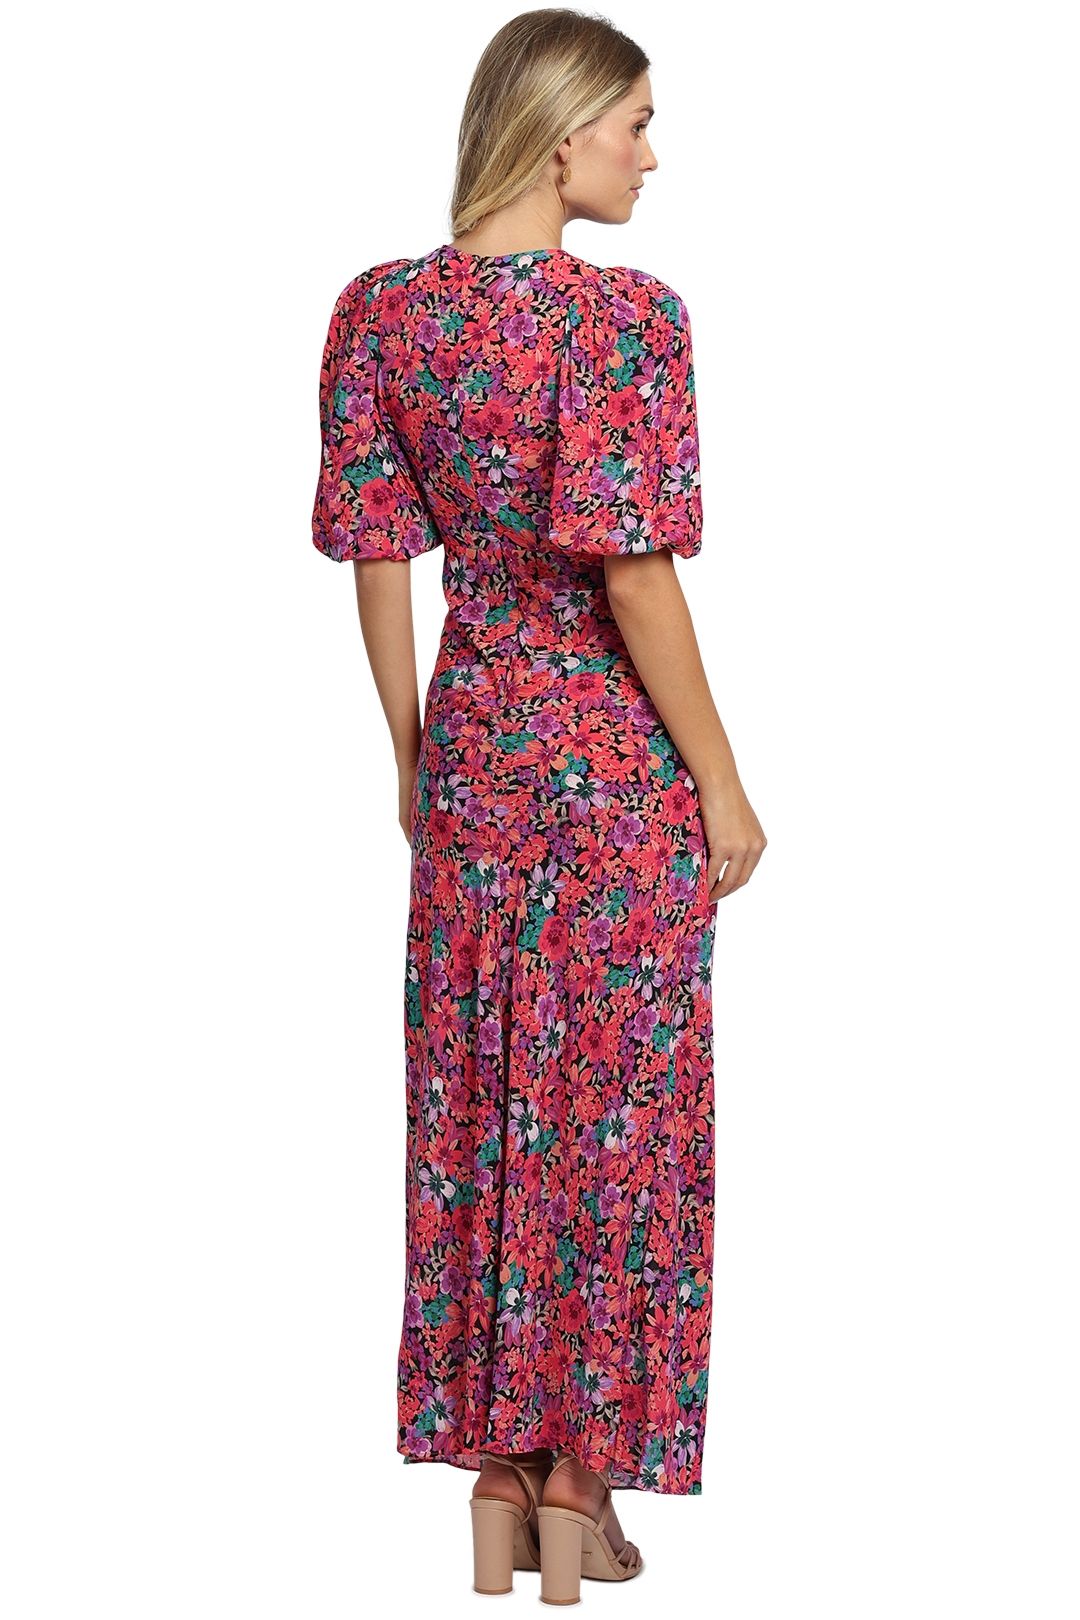 Kachel Colina Dress floral print